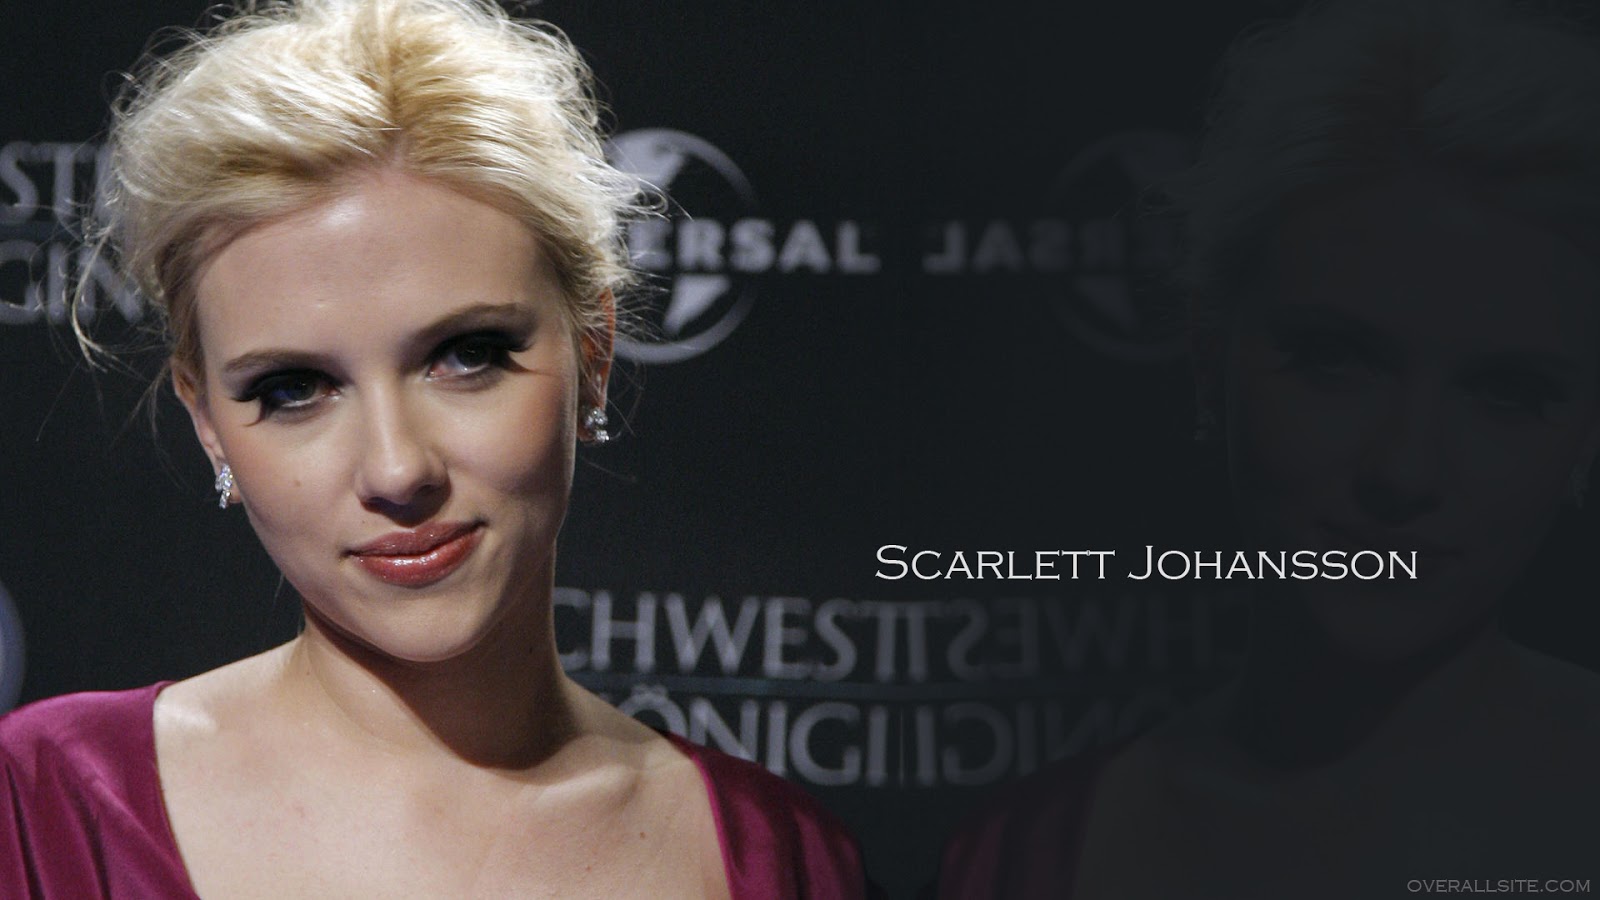 All About Hollywood Stars Scarlett Johansson New HD Wallpaper